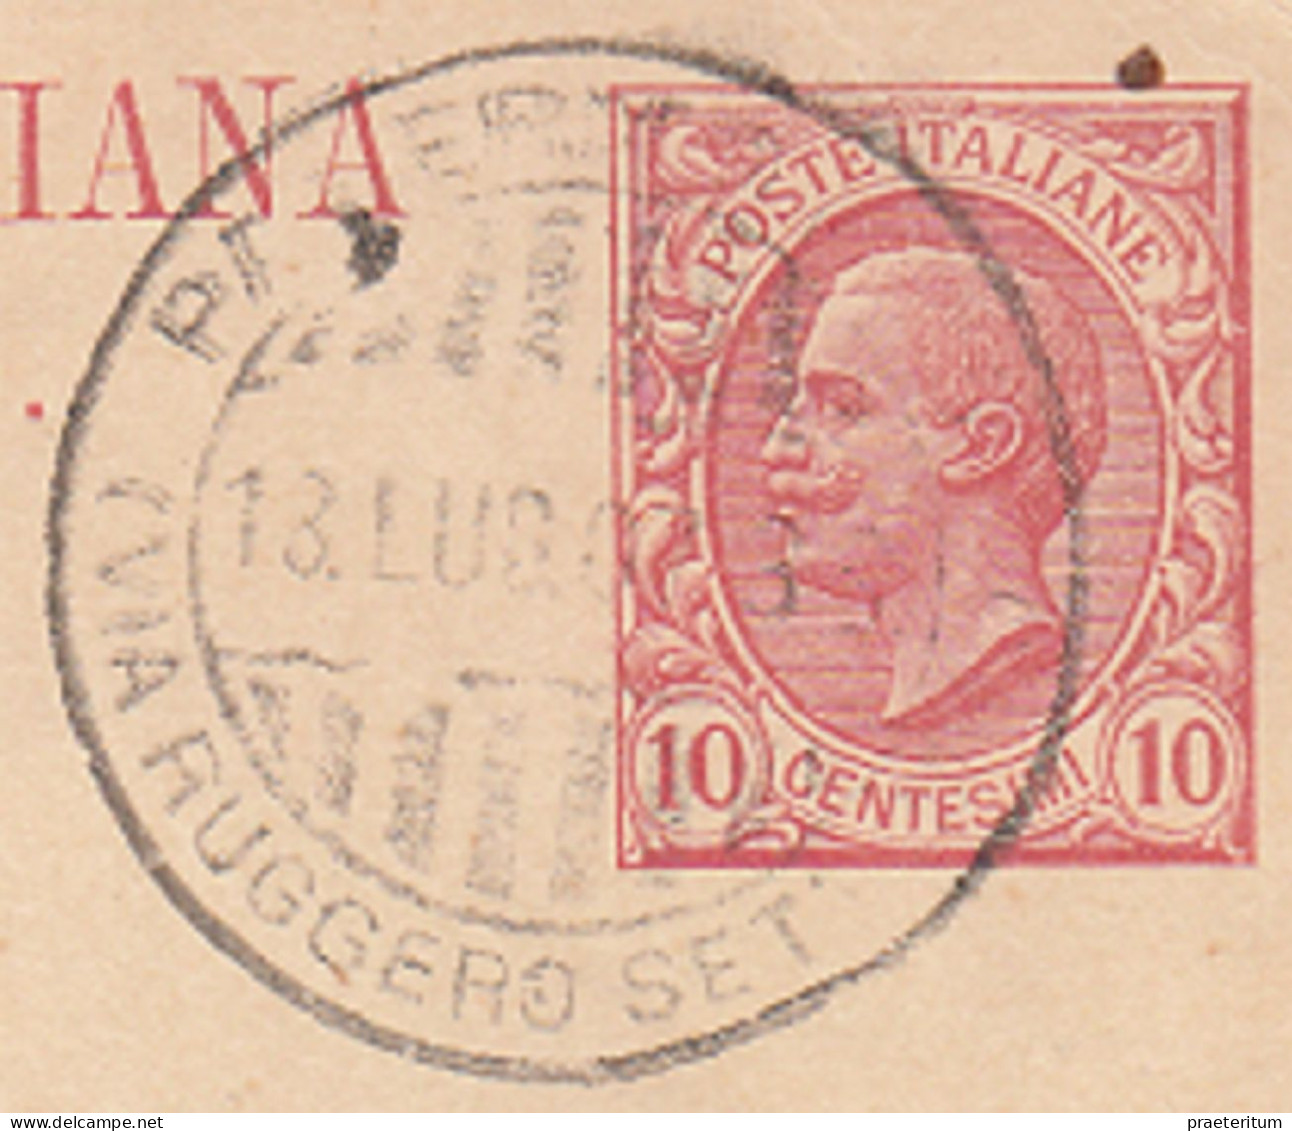 ITALIA Lettera Palermo Via Ruggero Set, 14 Lug. 1907 A Paris - Marcophilie